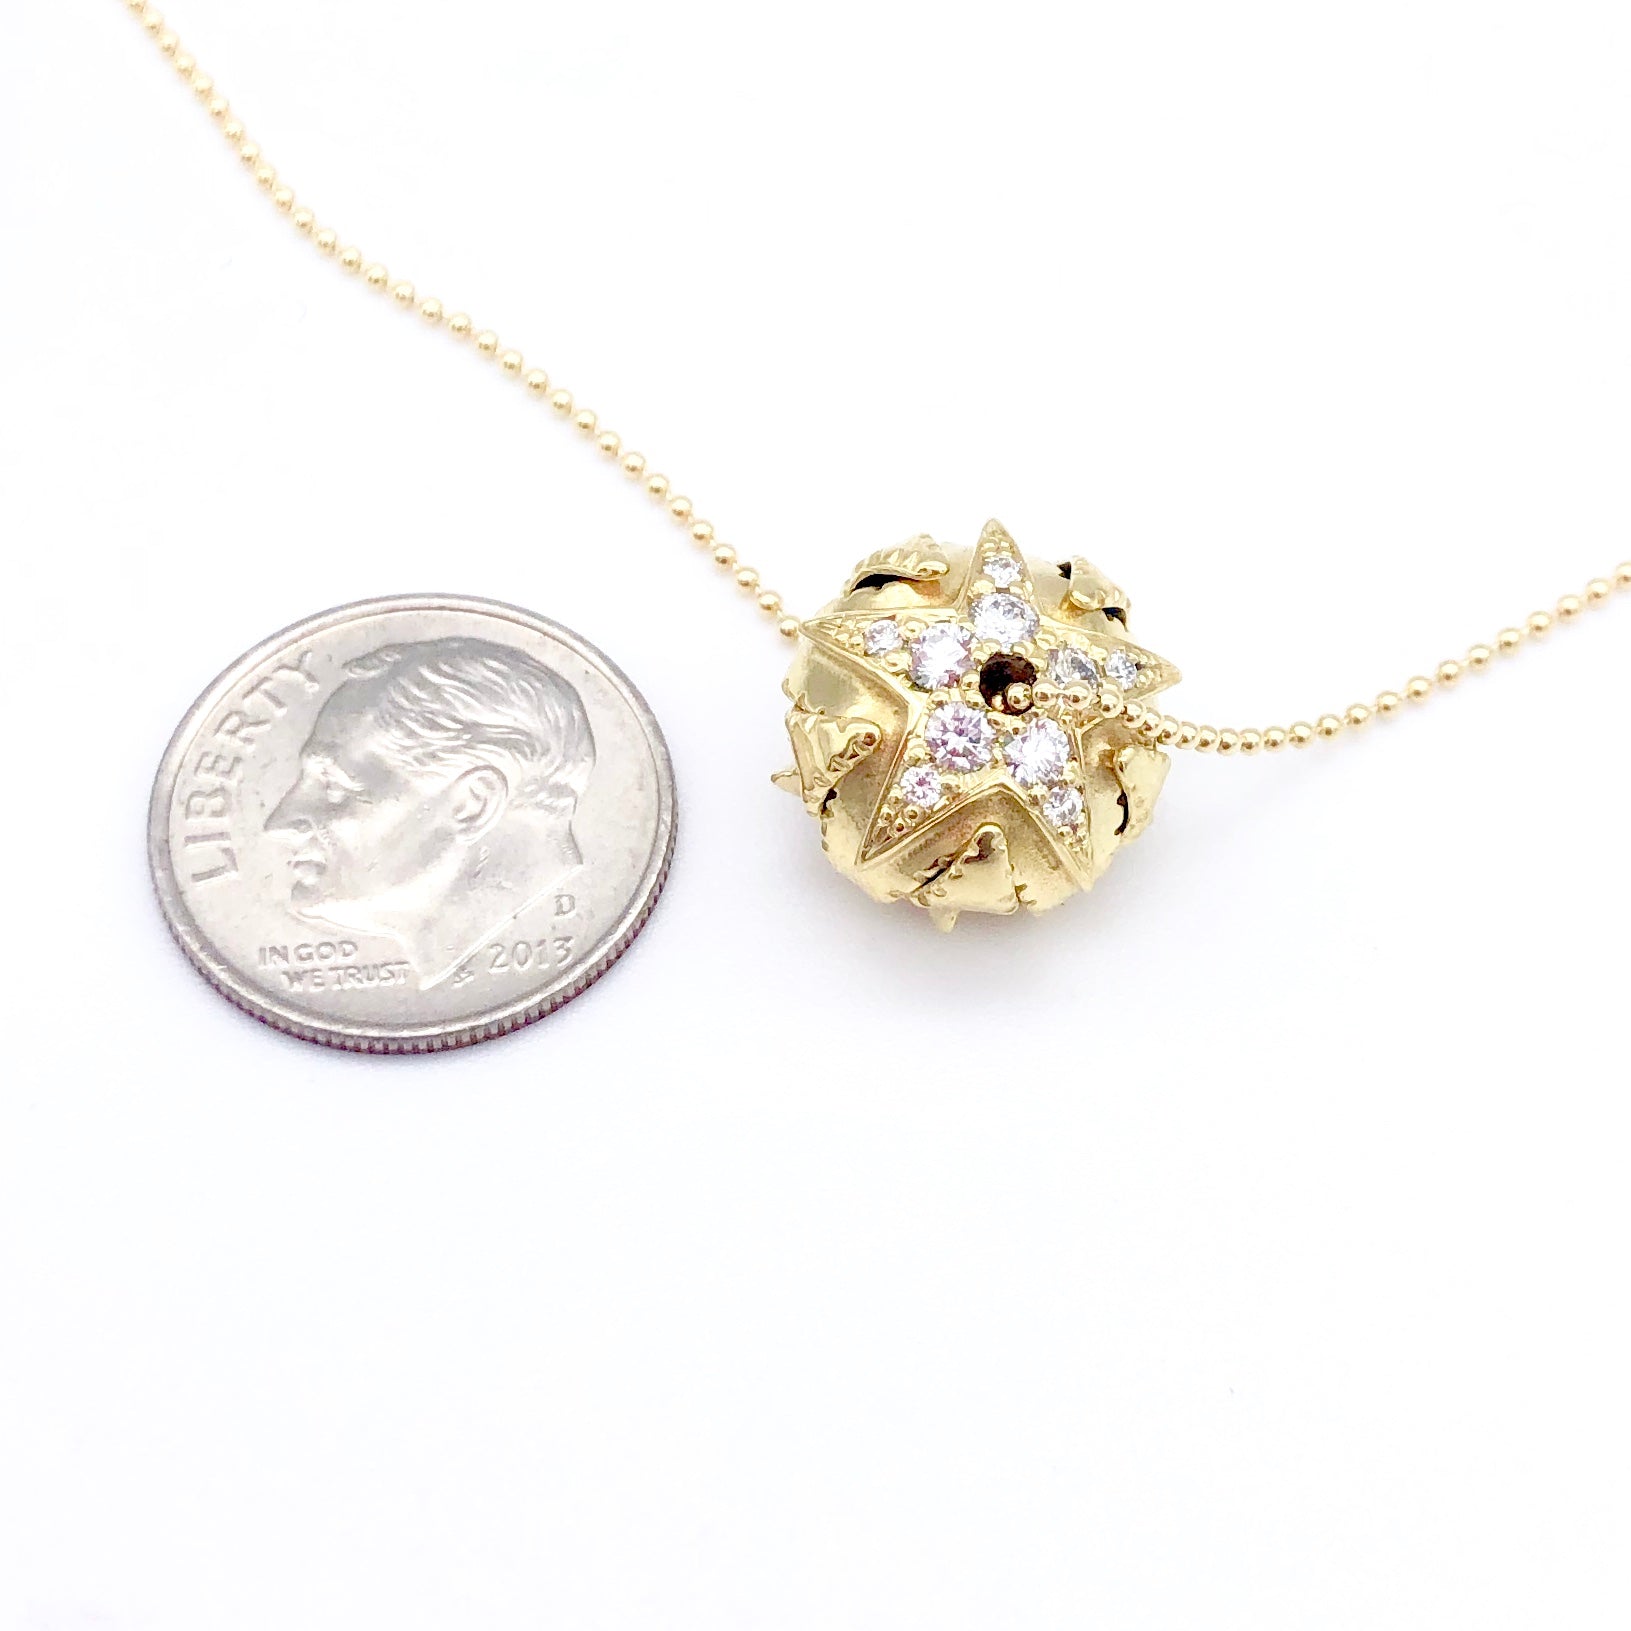 18k Gold Star Diamond Pave´ Santa Fe Pearl Necklace